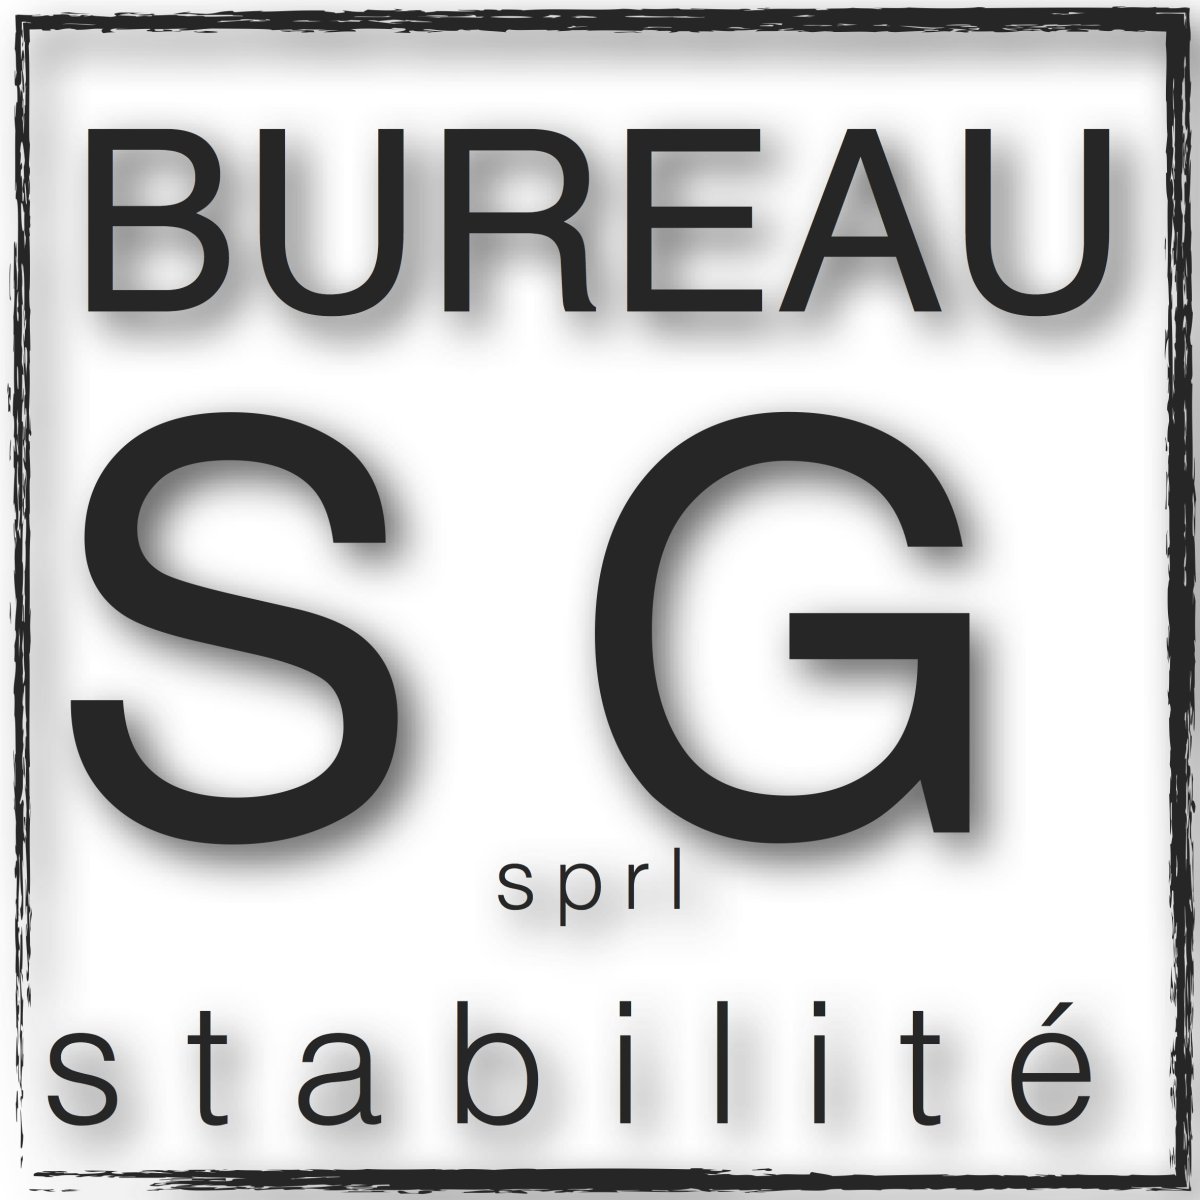 Bureau SG